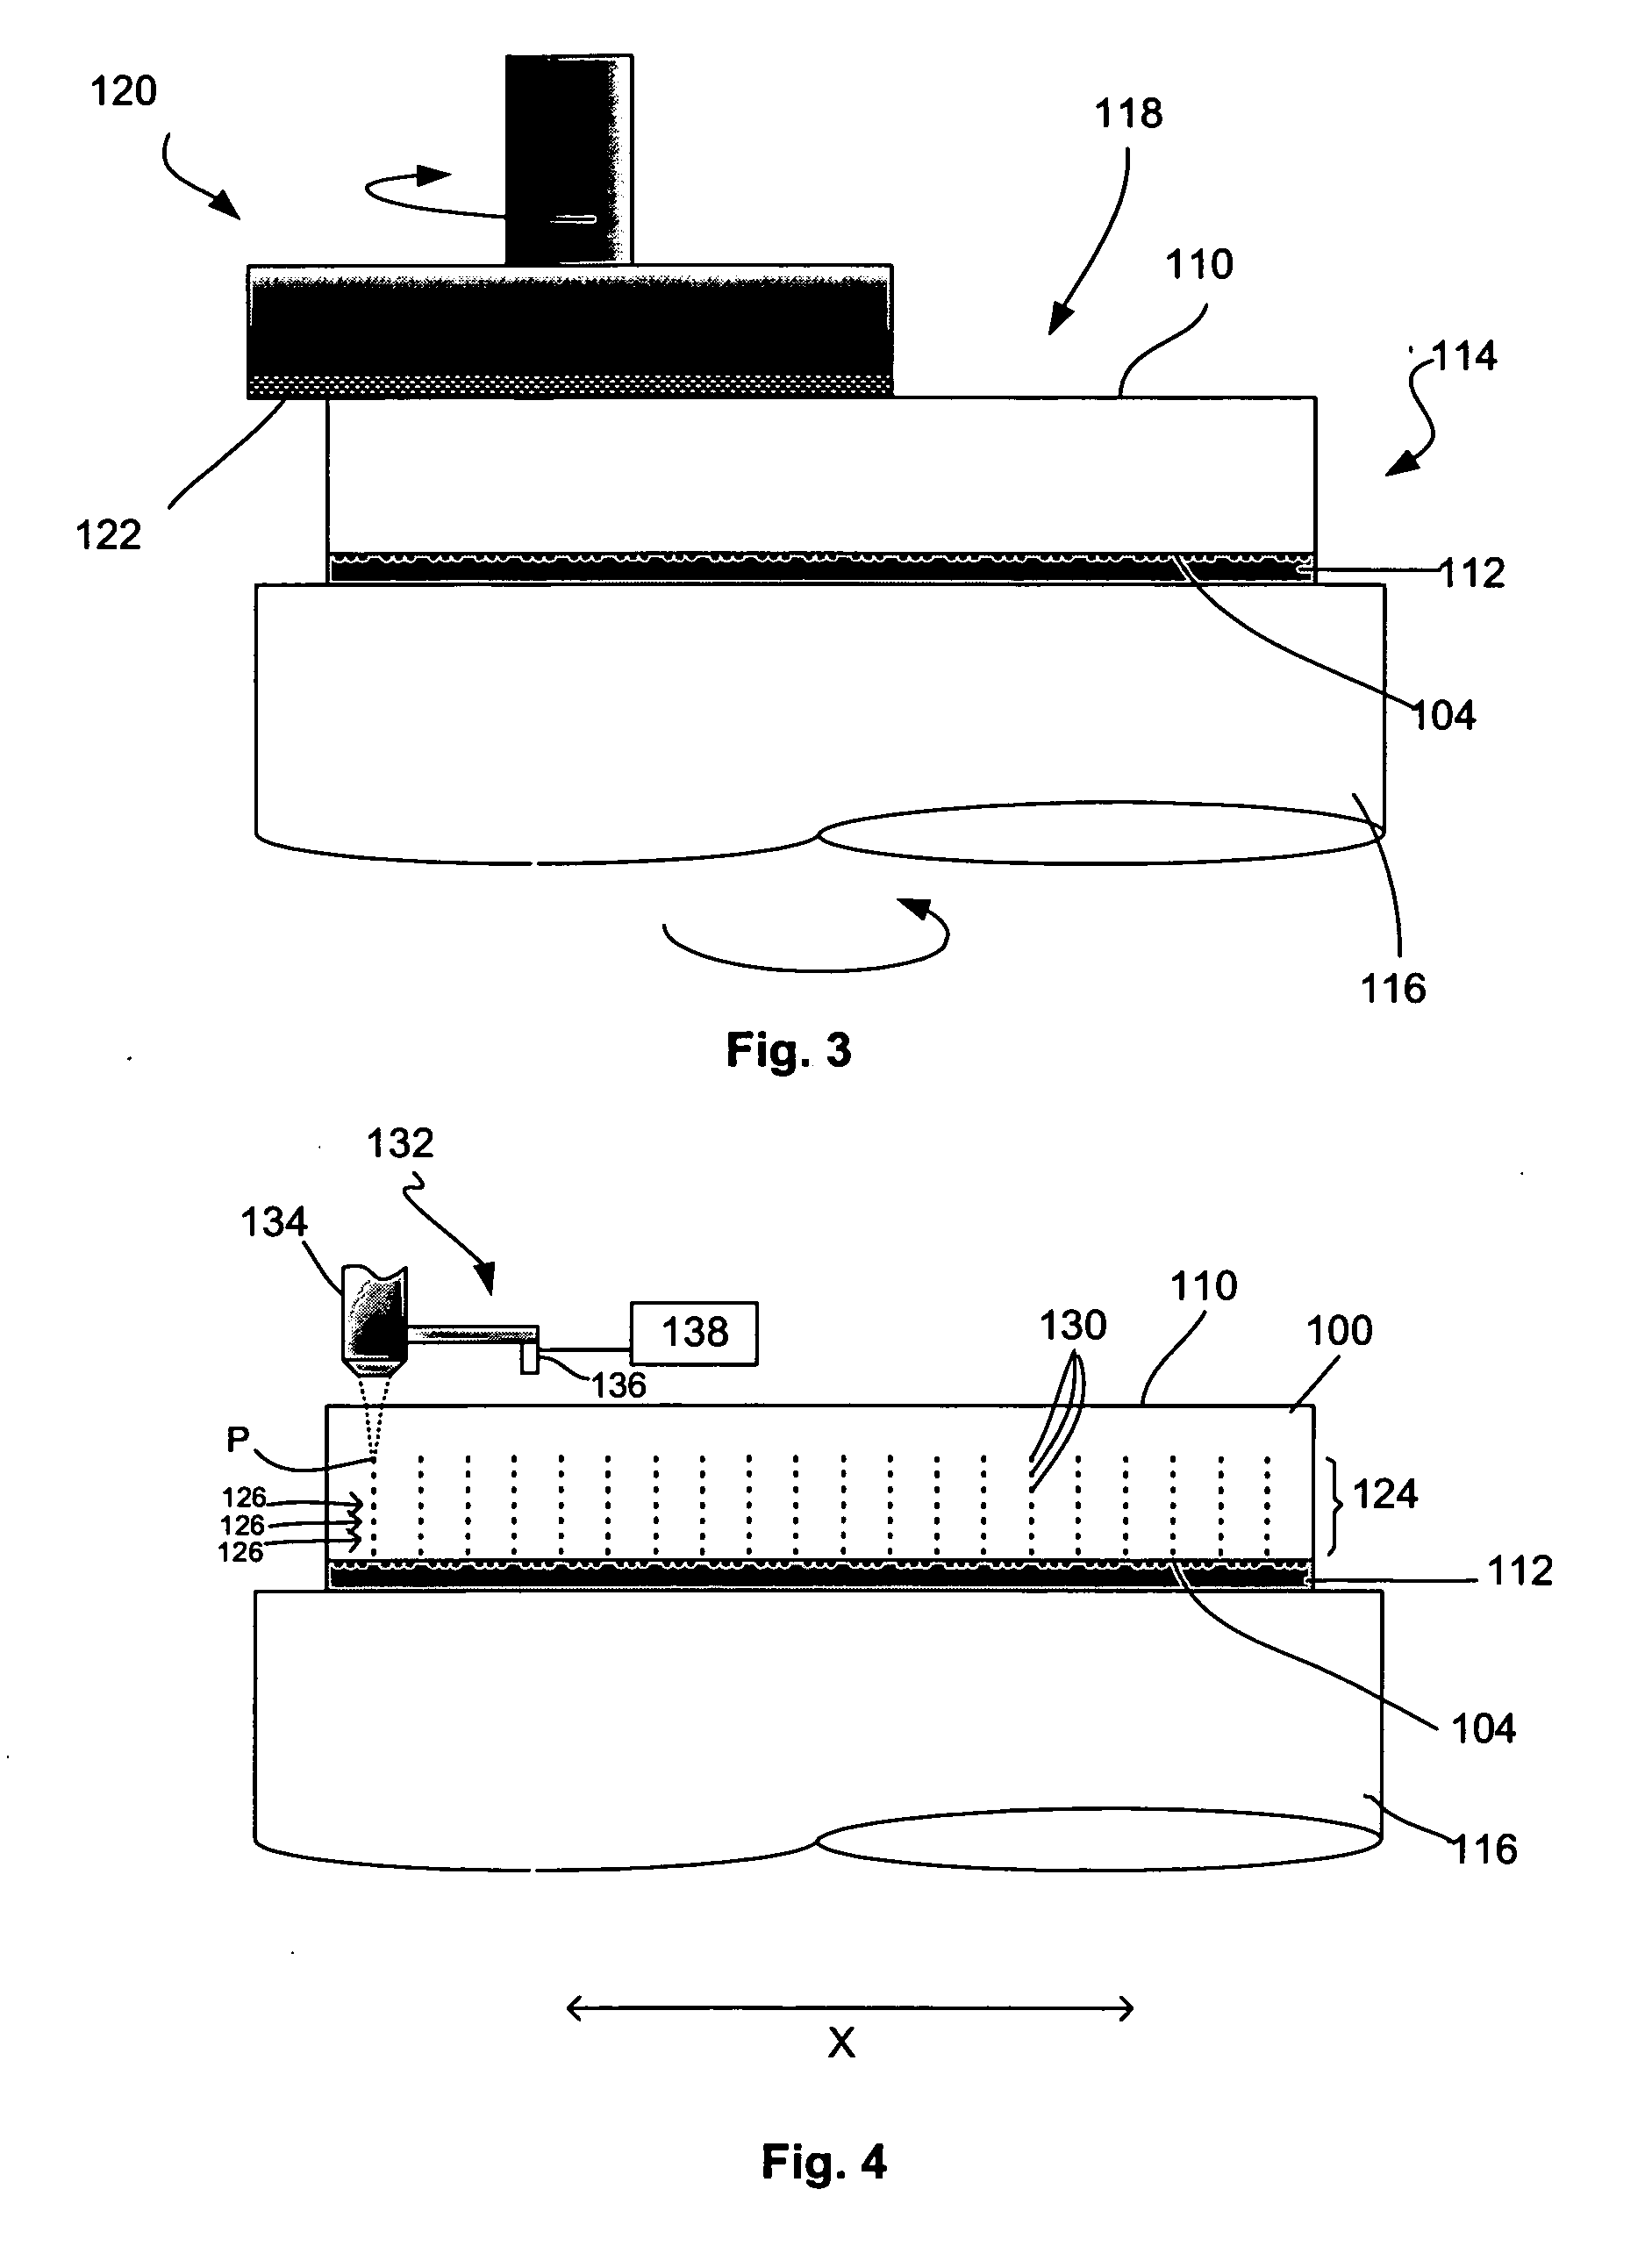 Method of singulating a microelectronic wafer